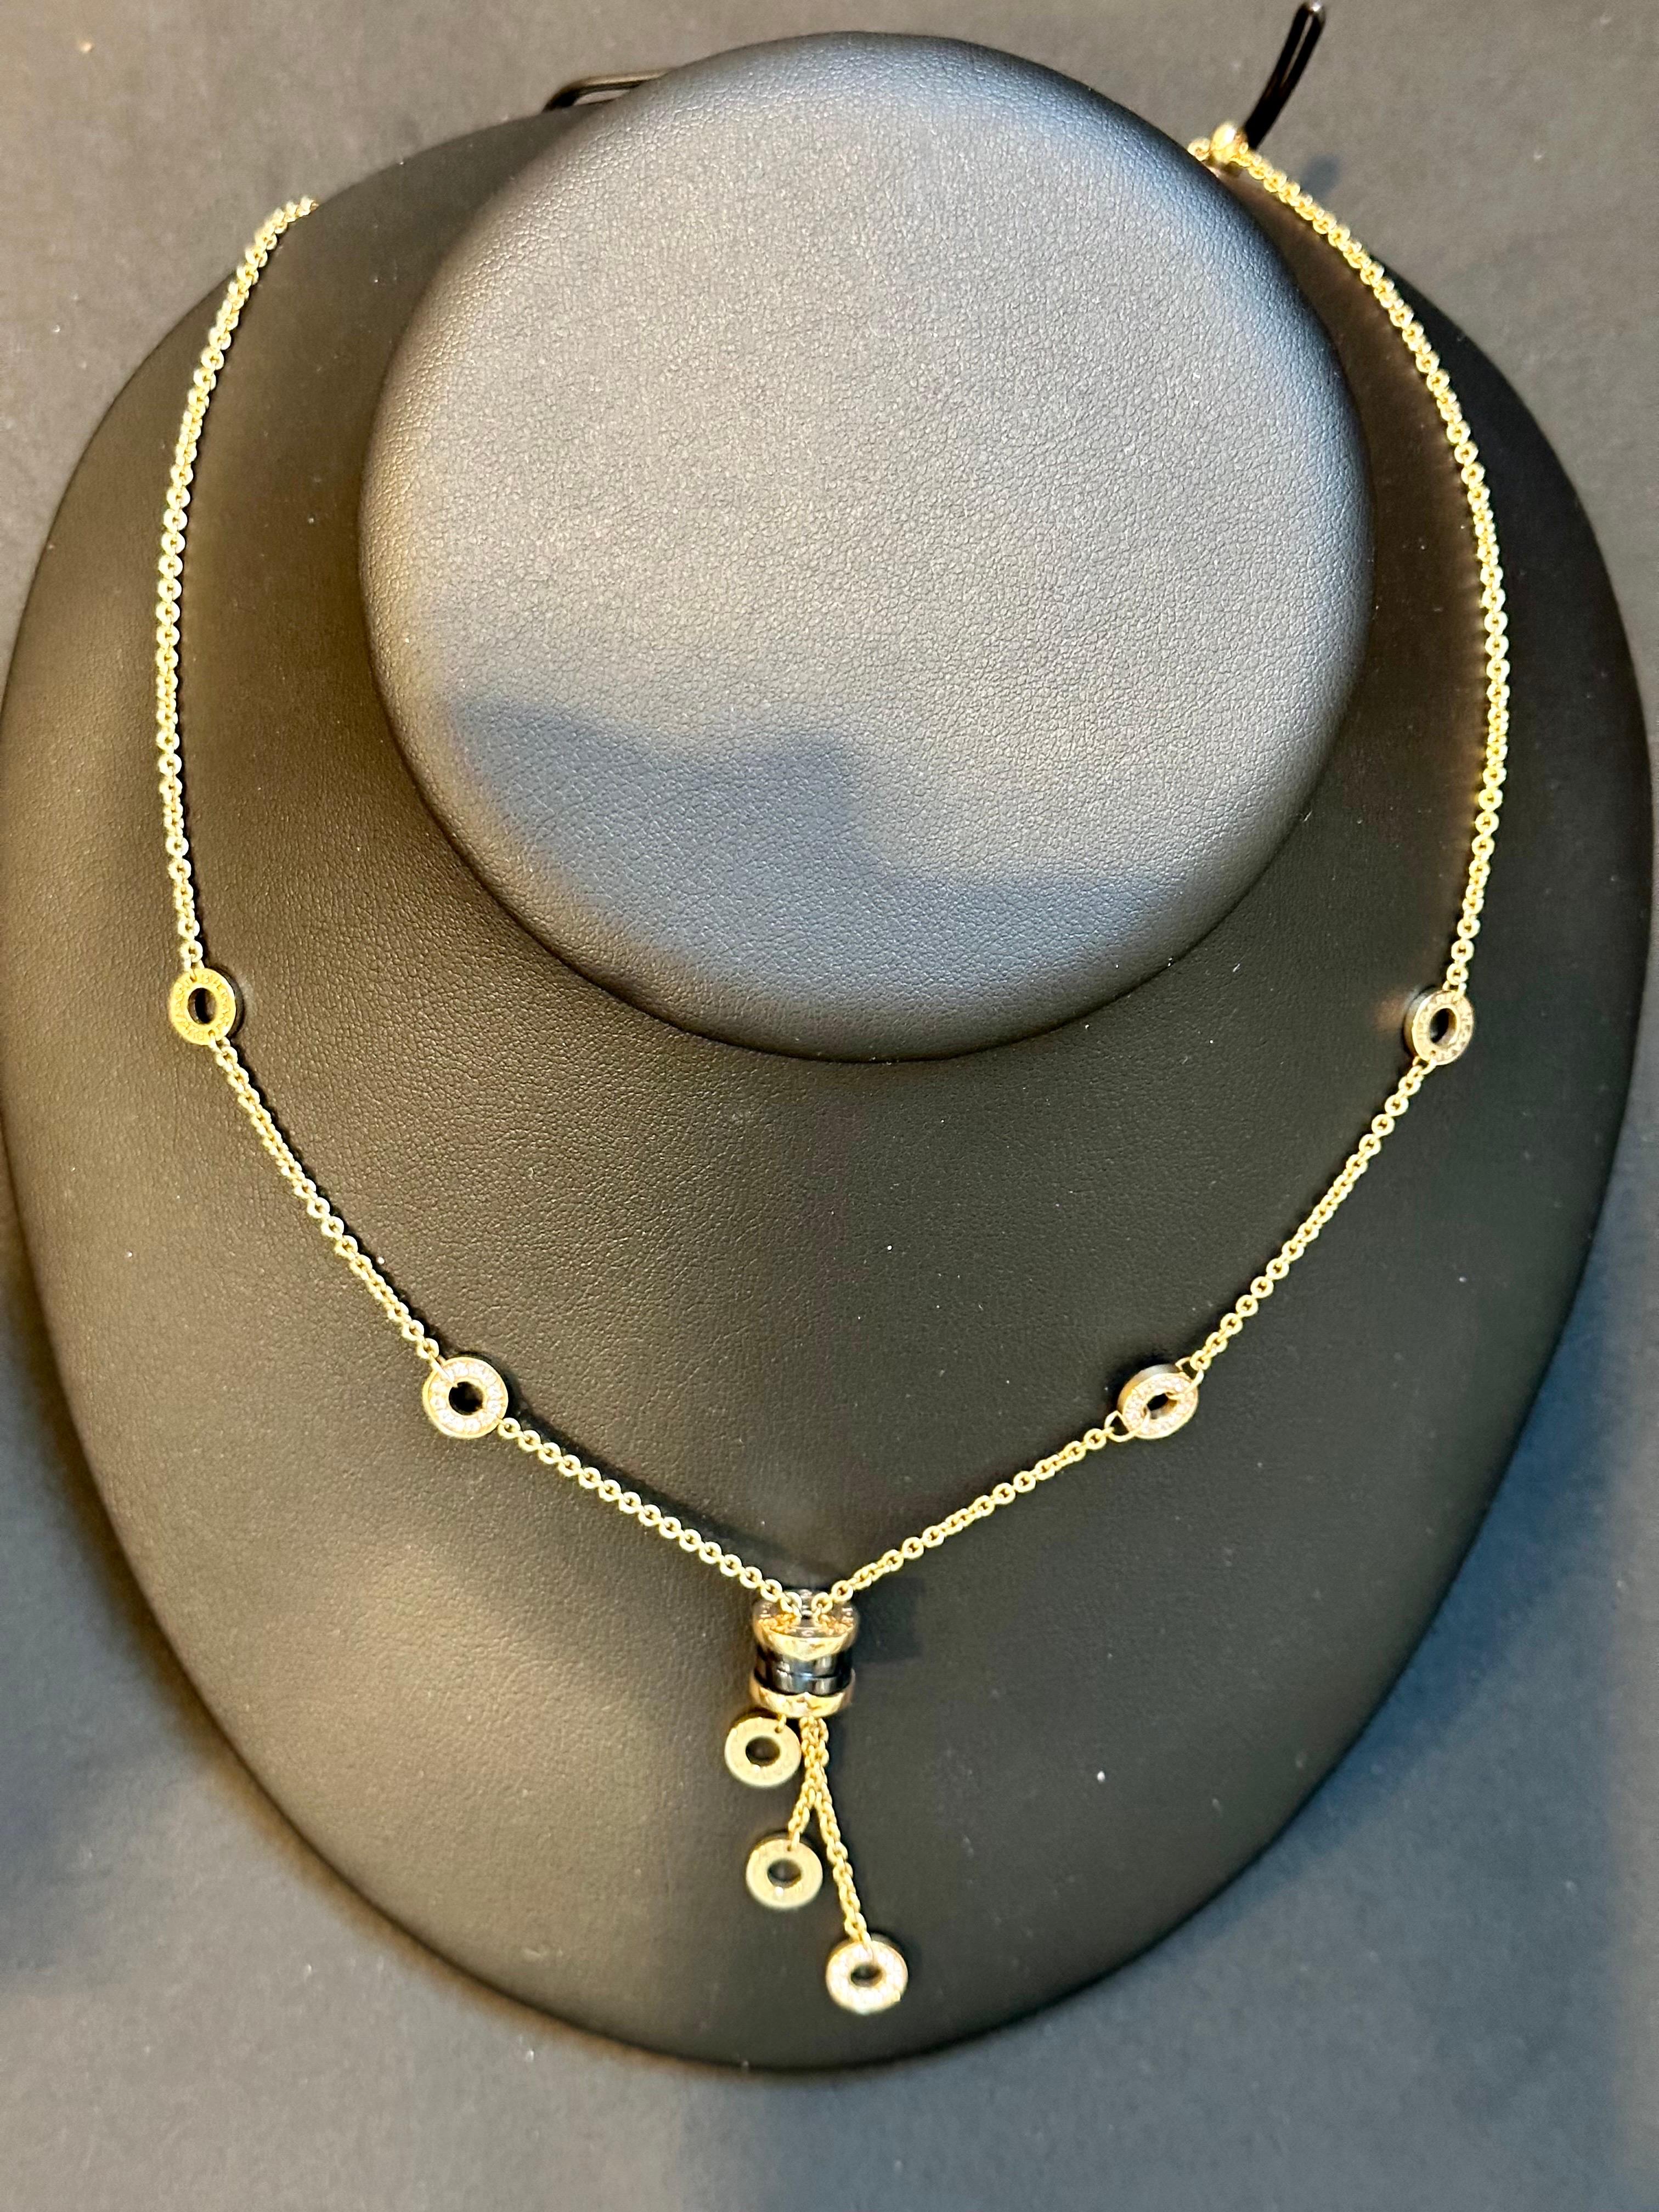 bvlgari necklace monte carlo price